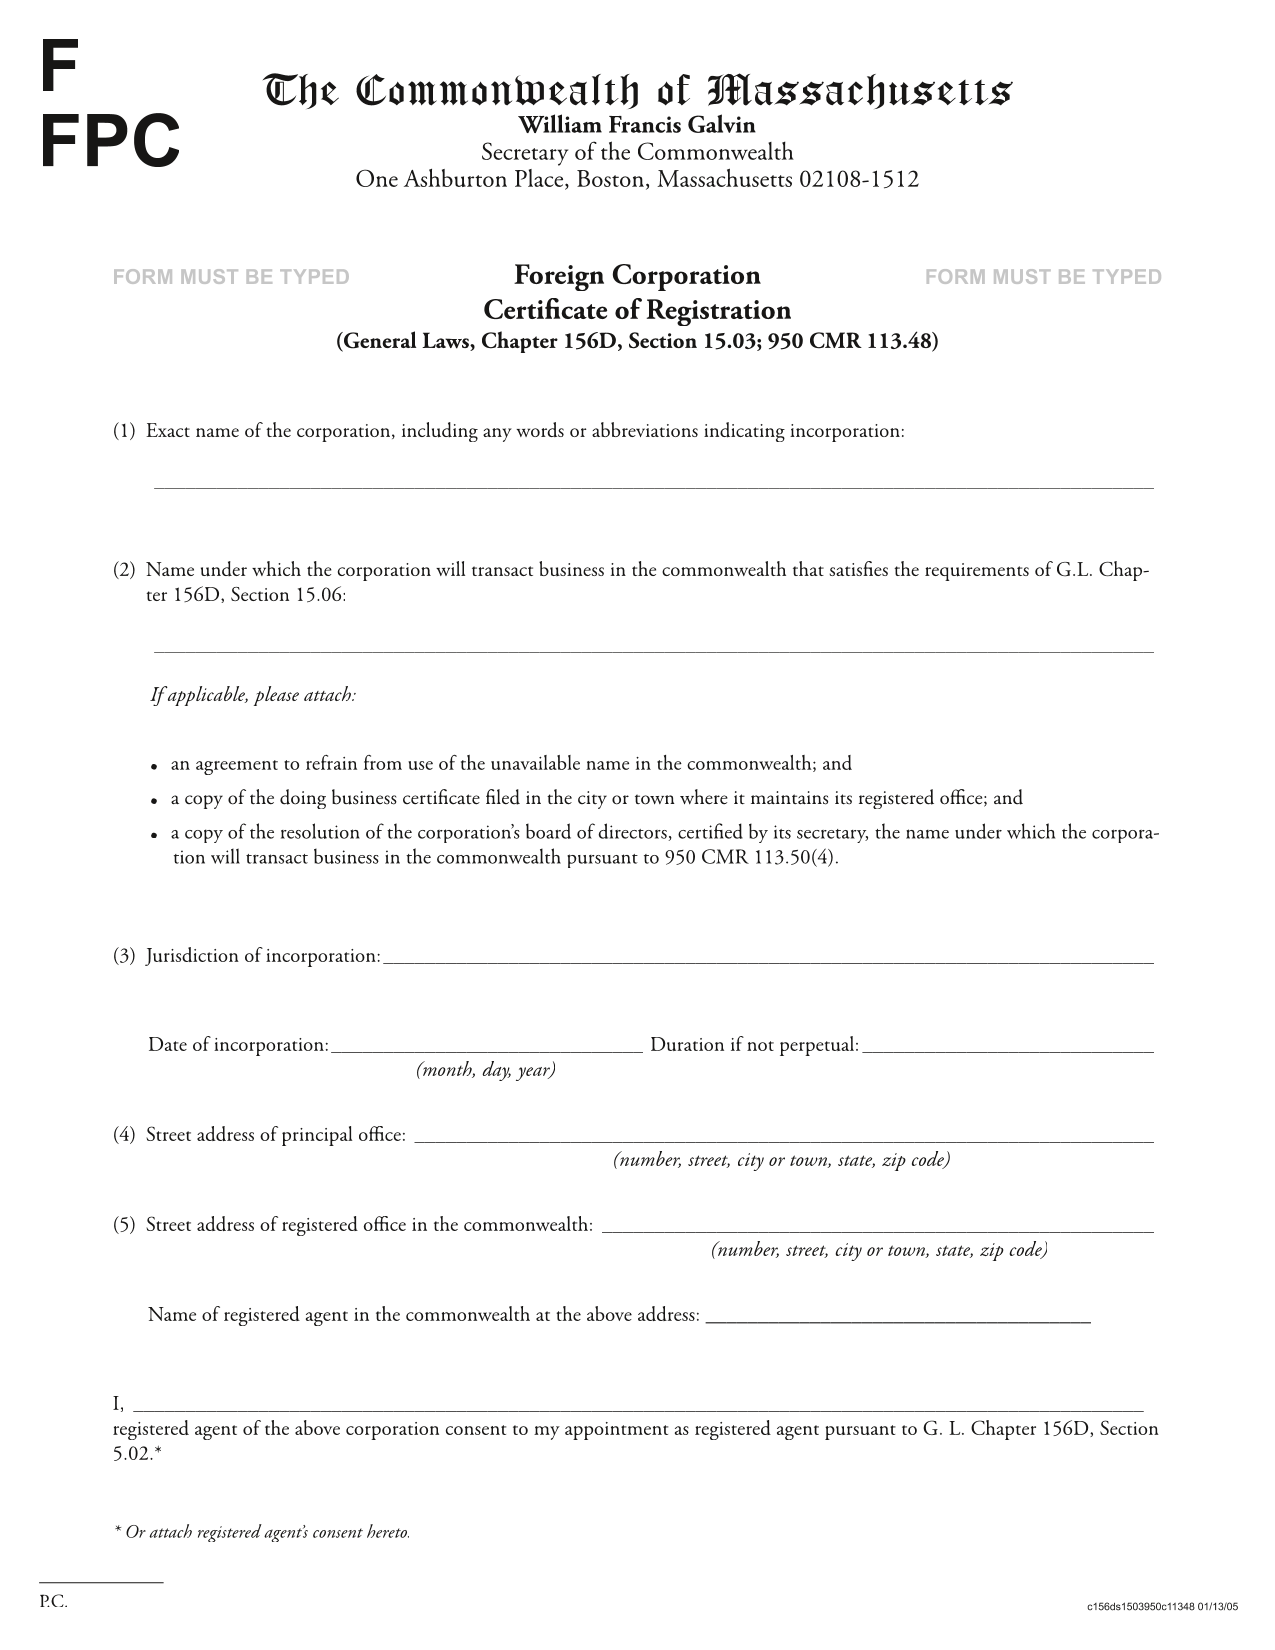 massachusetts-foreign-corporation-certificate-of-registration